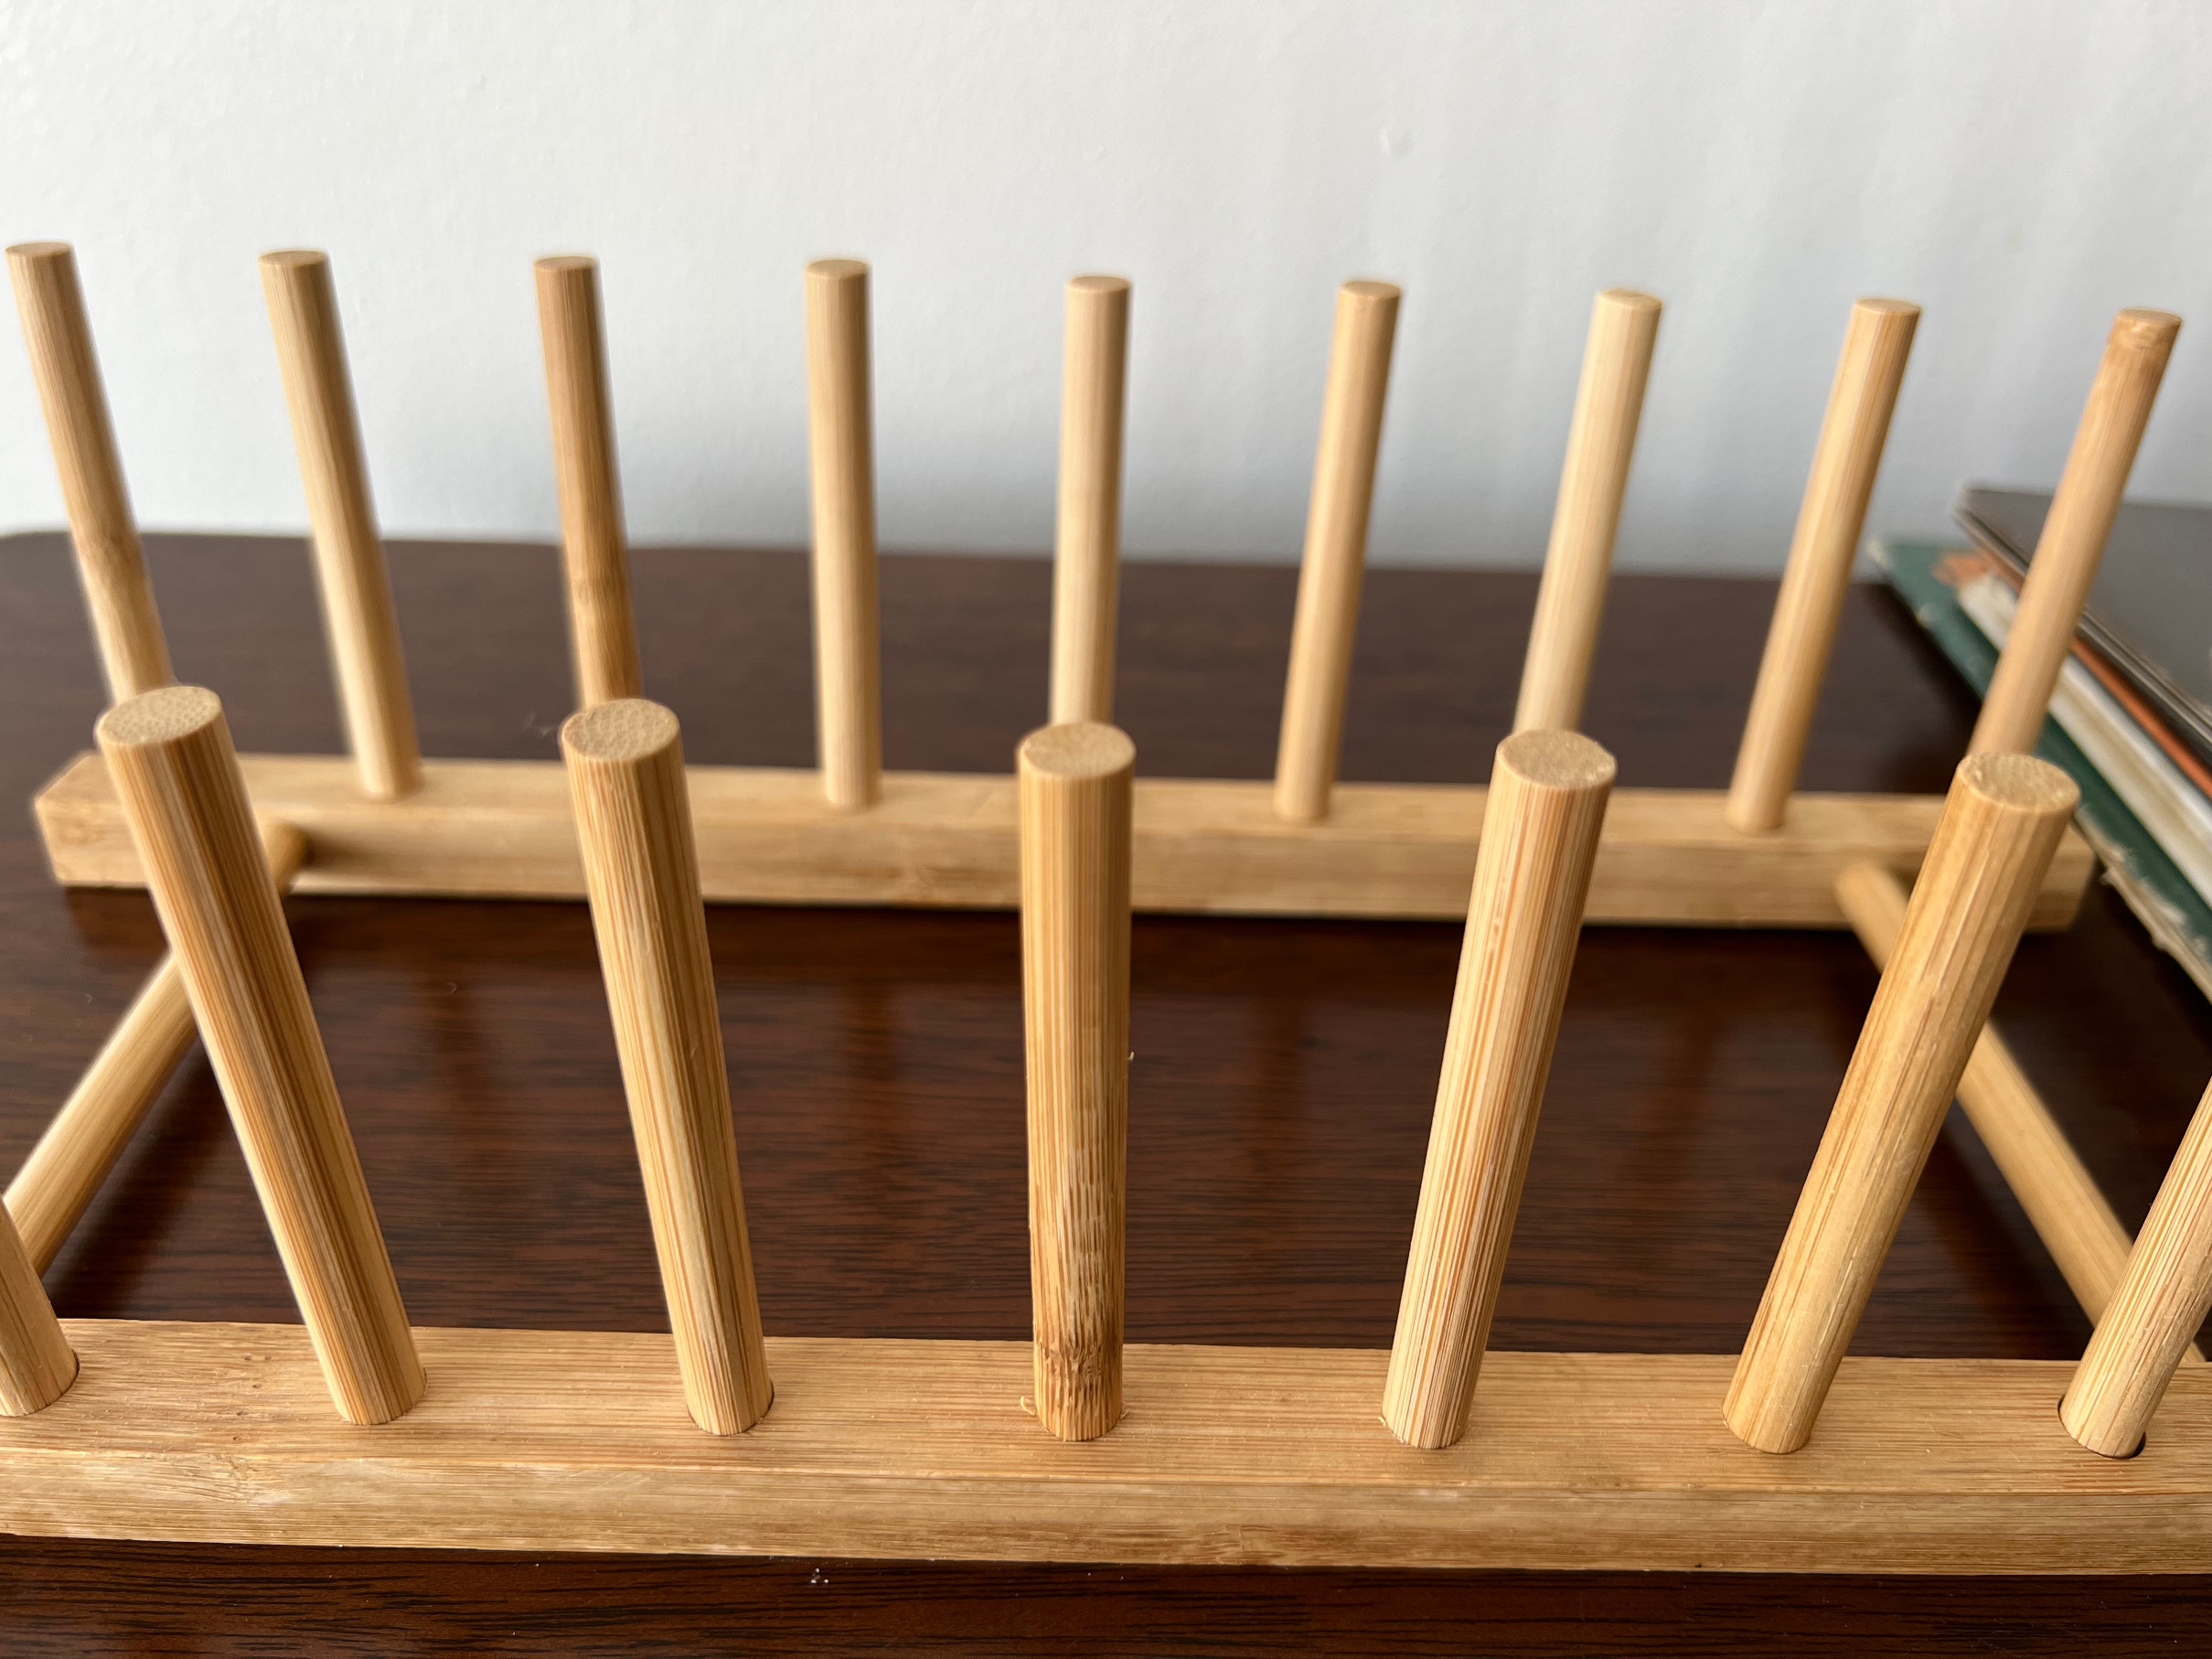 Bamboo Dish Drying Rack Organizer Organization Tips Repurpose Those Someday Goals